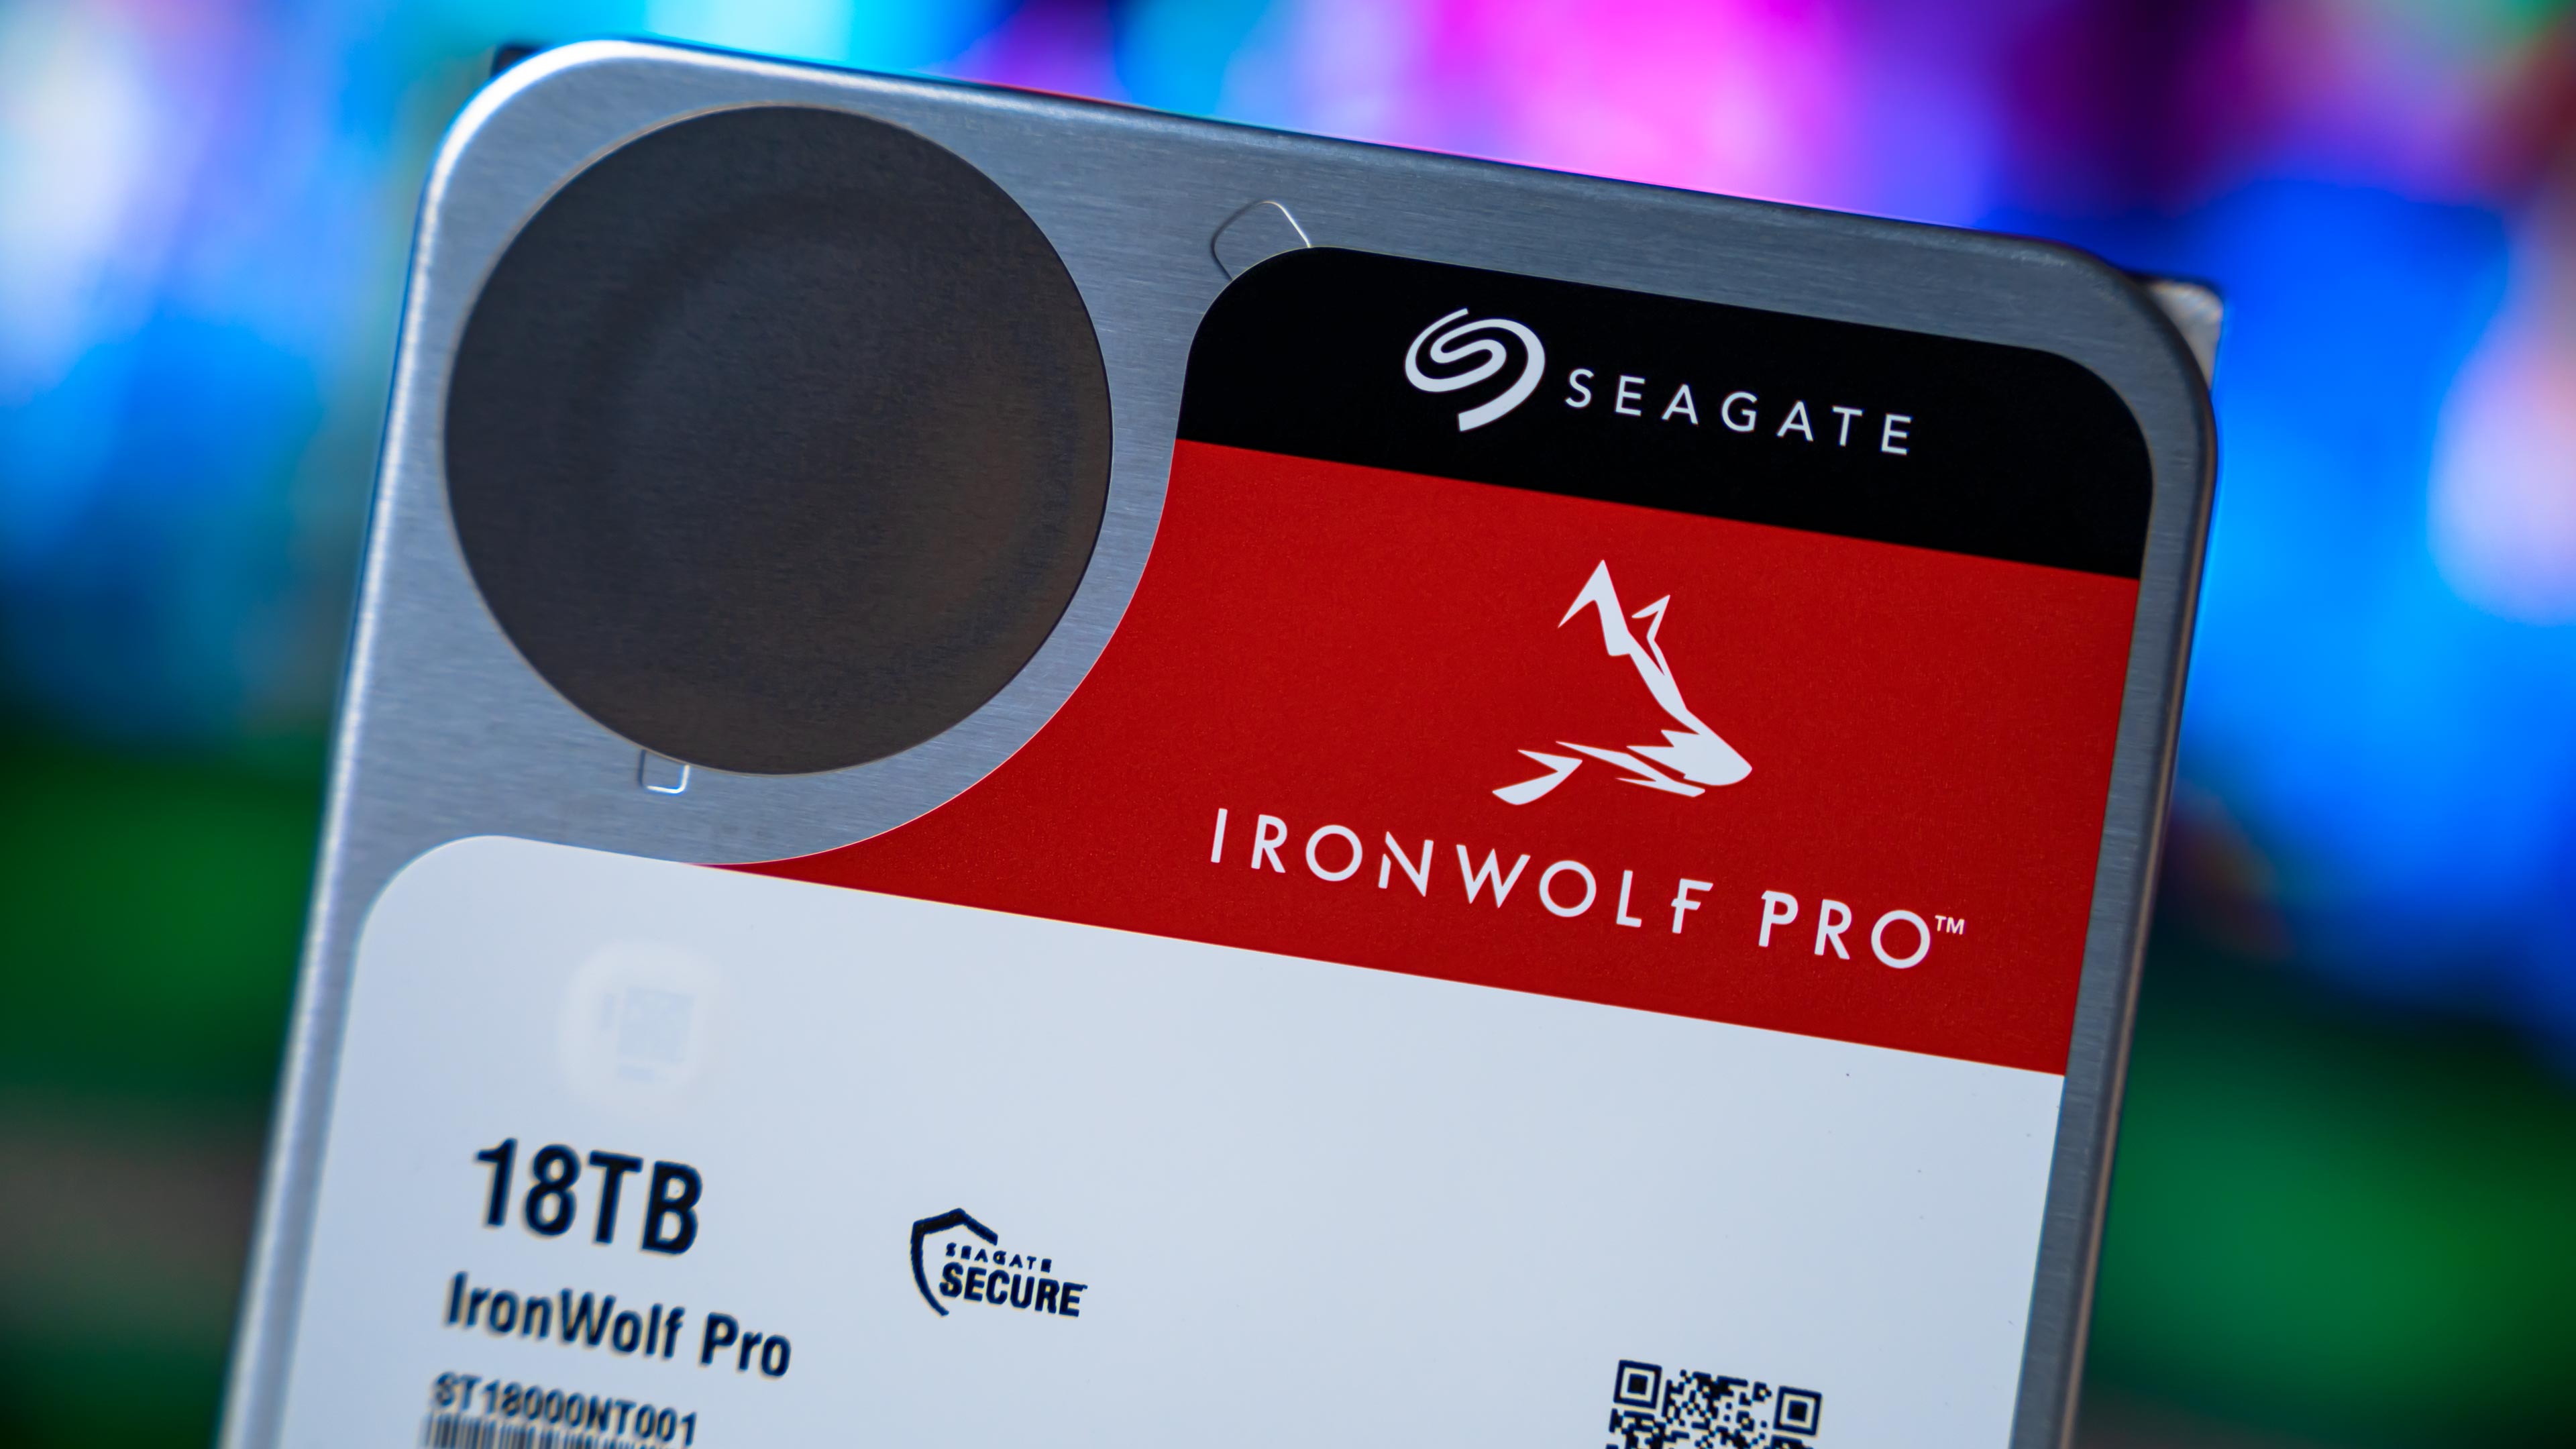 Seagate IronWolf Pro 18TB HDD (2)